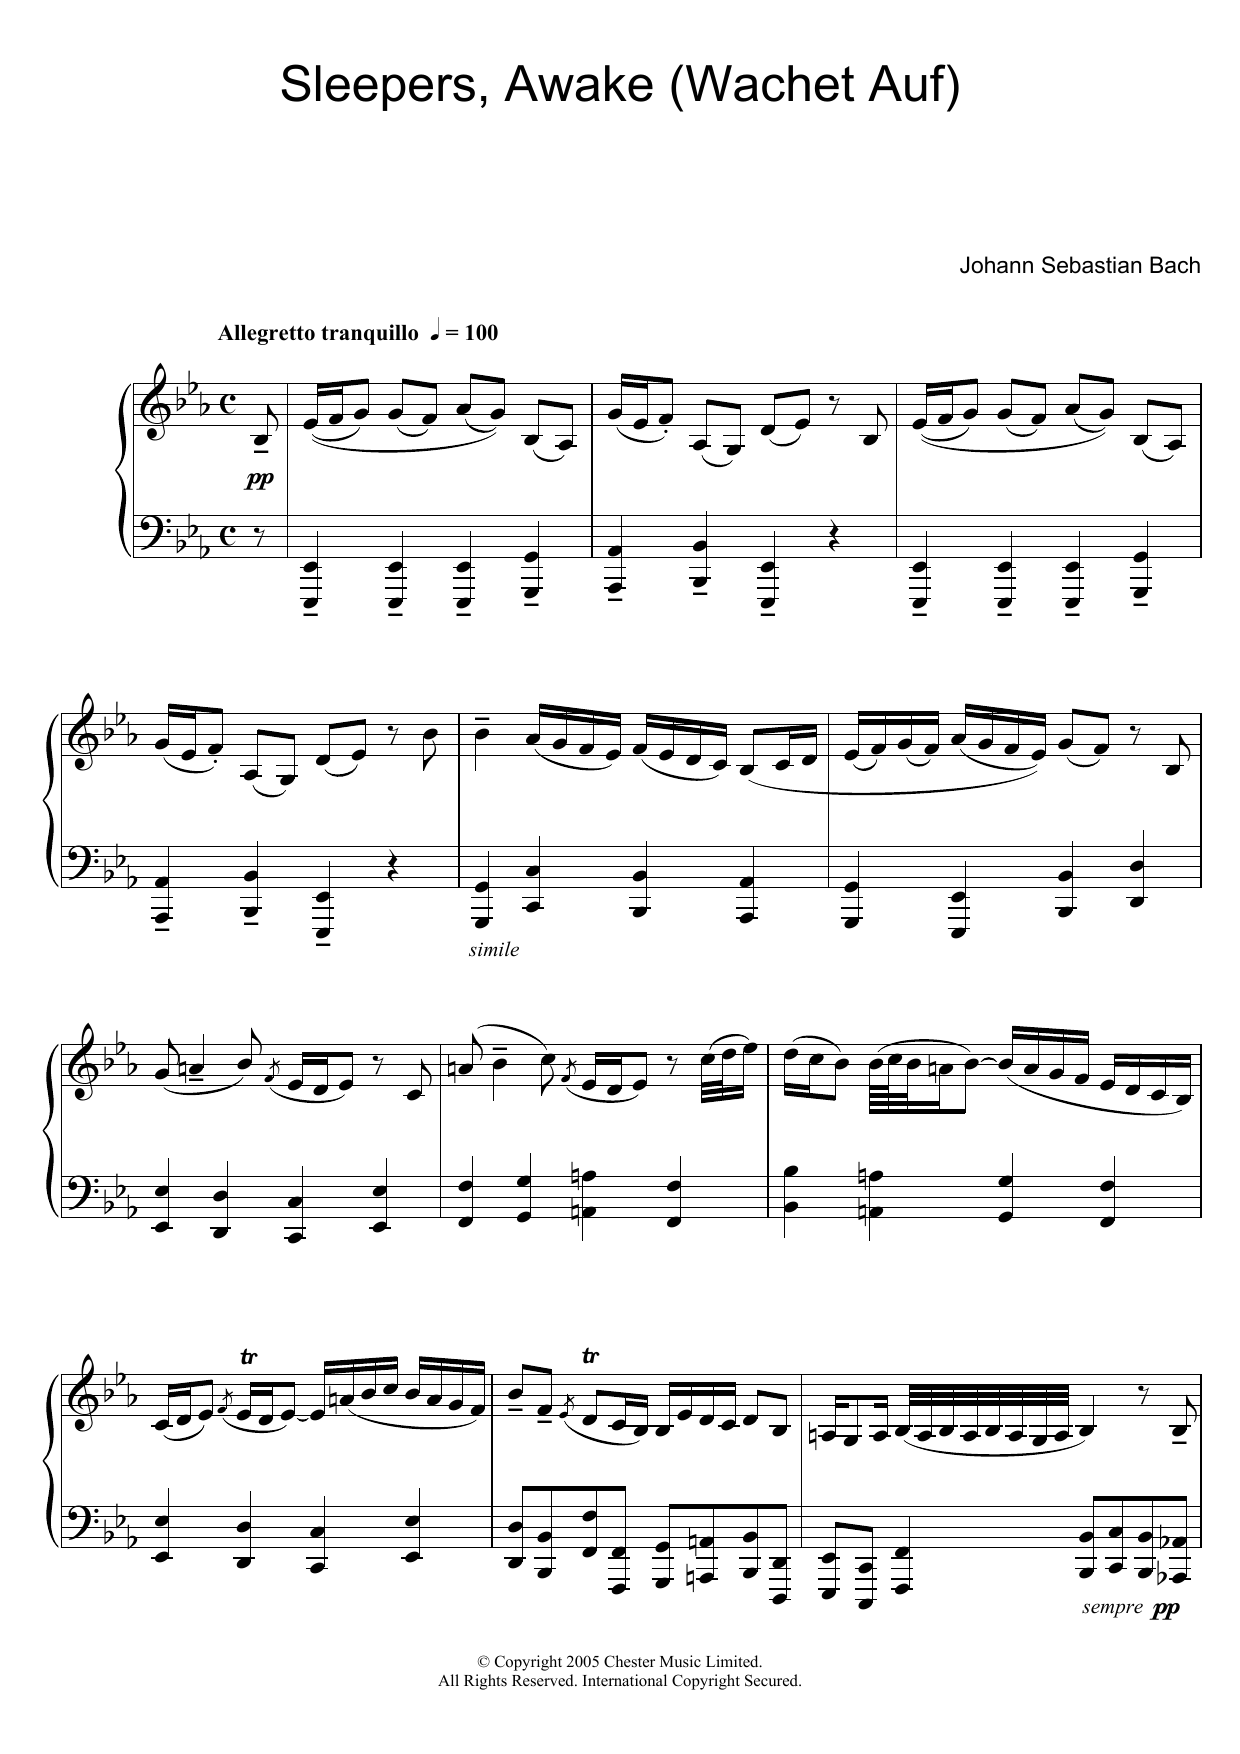 Download Johann Sebastian Bach Sleepers, Awake (Wachet Auf) Sheet Music and learn how to play Tenor Saxophone PDF digital score in minutes